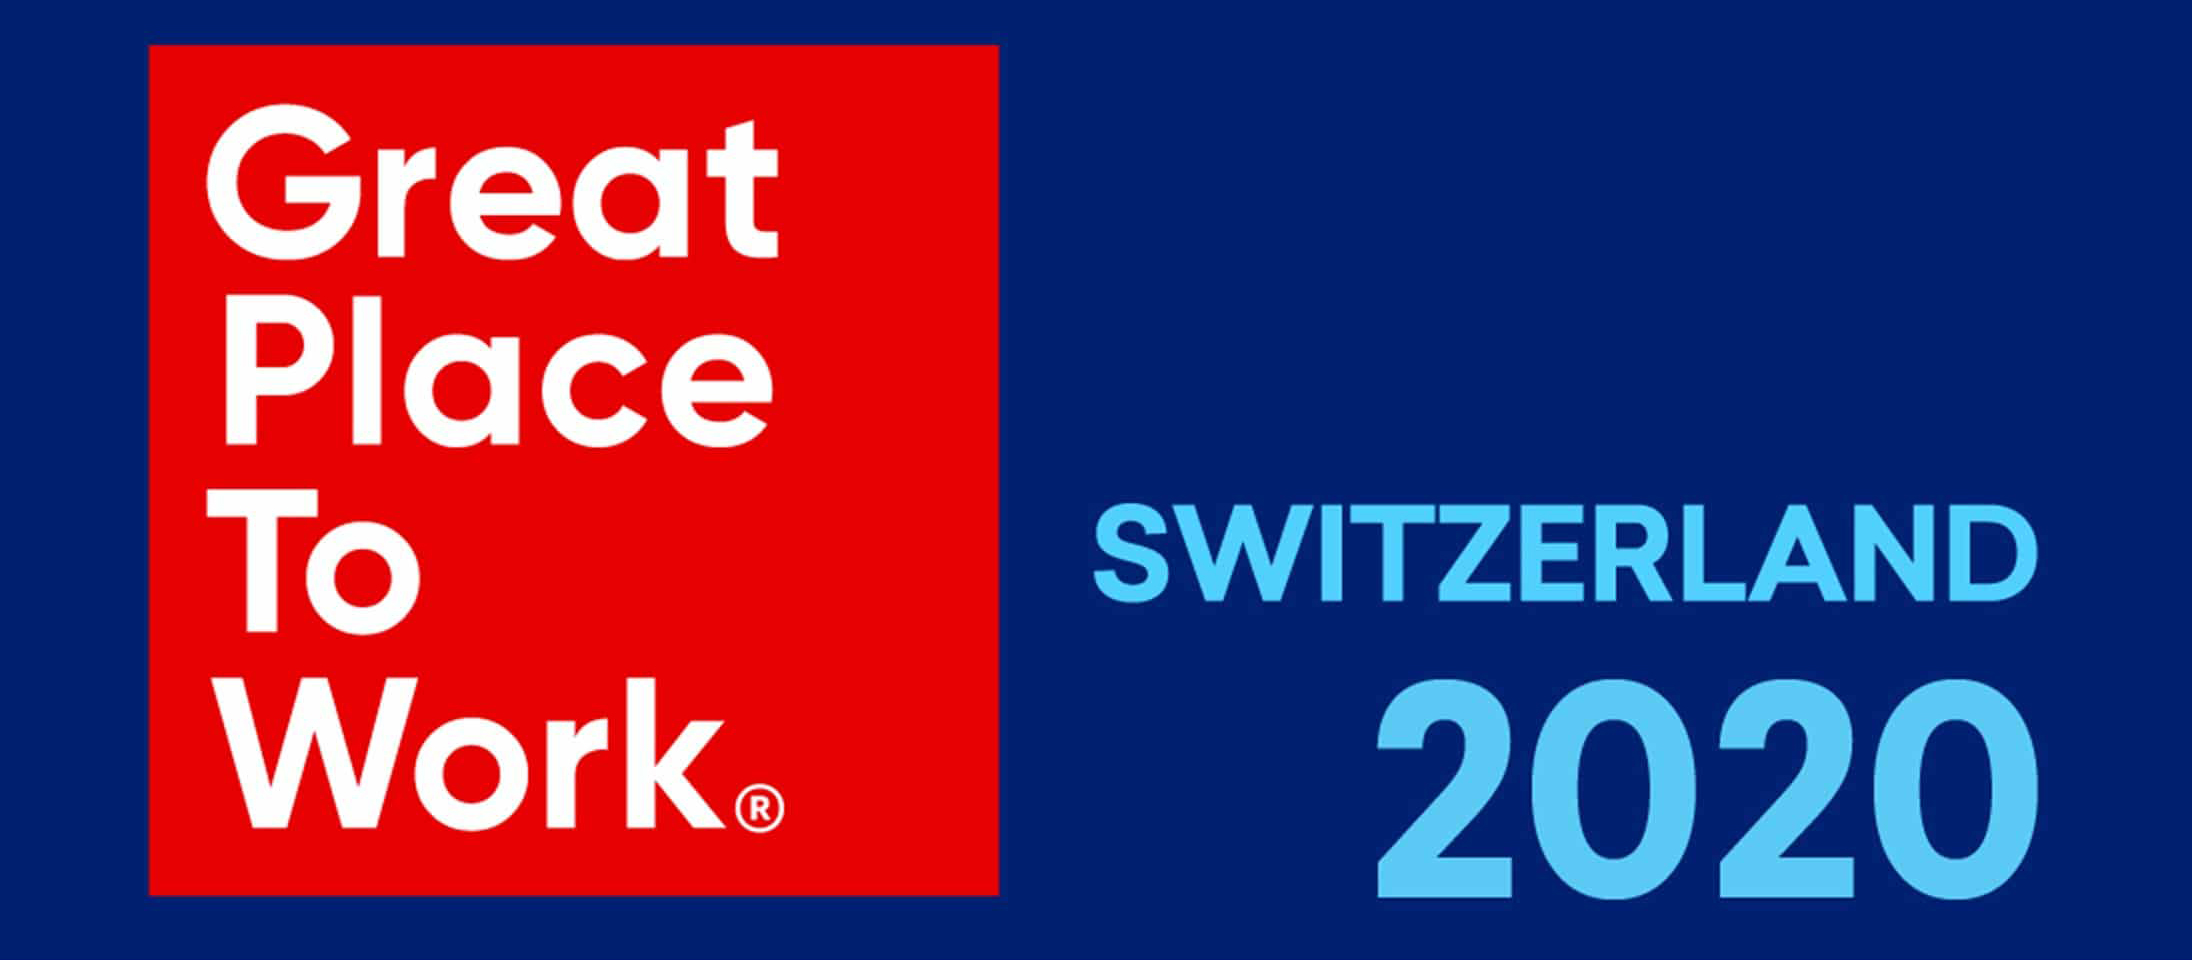 great place to work switzerland 2020 logo